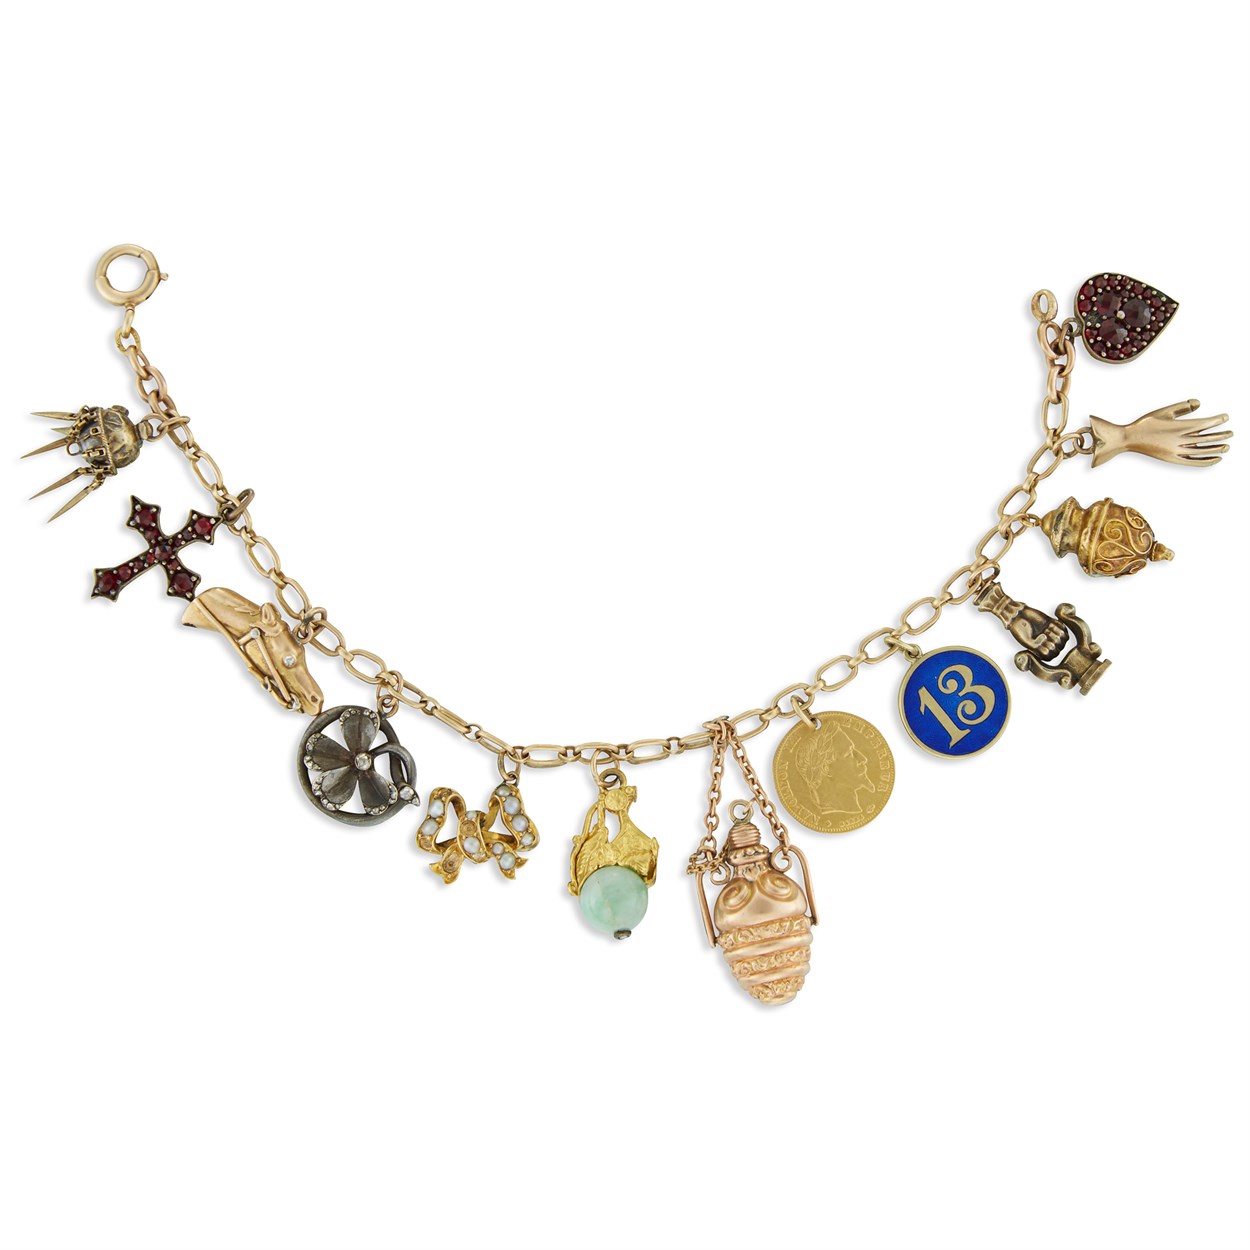 Lot 12 - A gem-set, gold, silver and metal charm bracelet